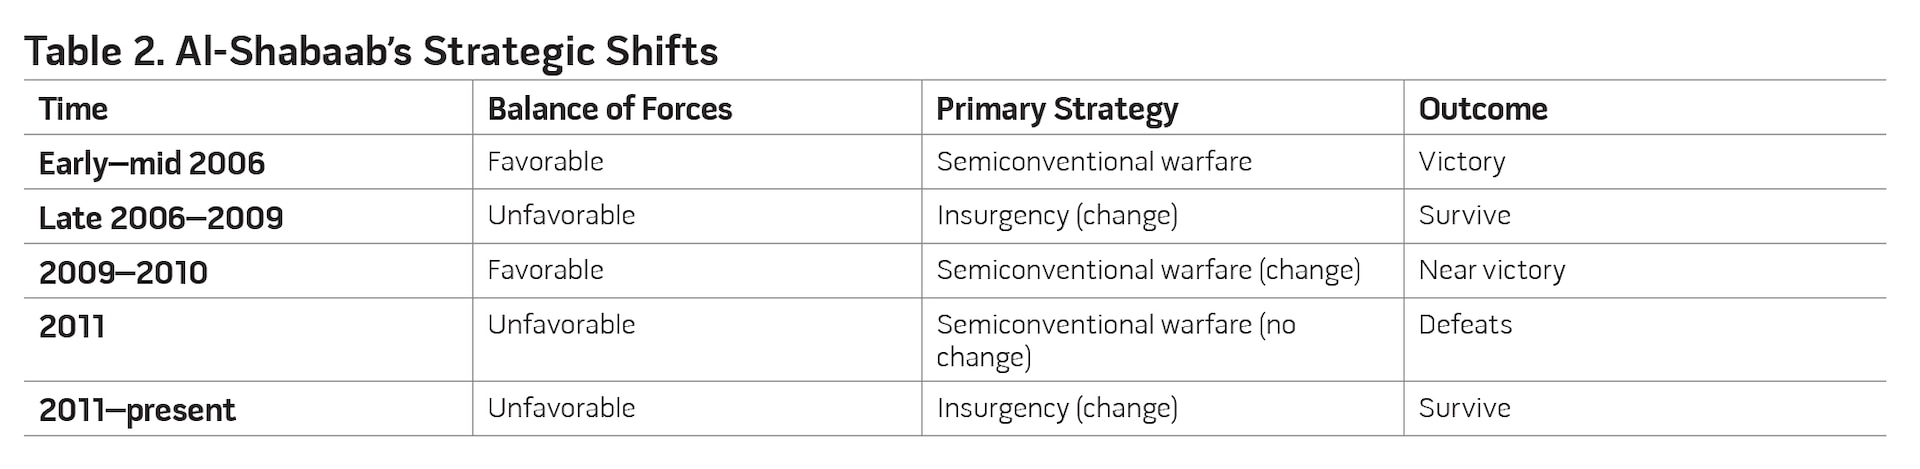 Table 2. Al-Shabaab’s Strategic Shifts